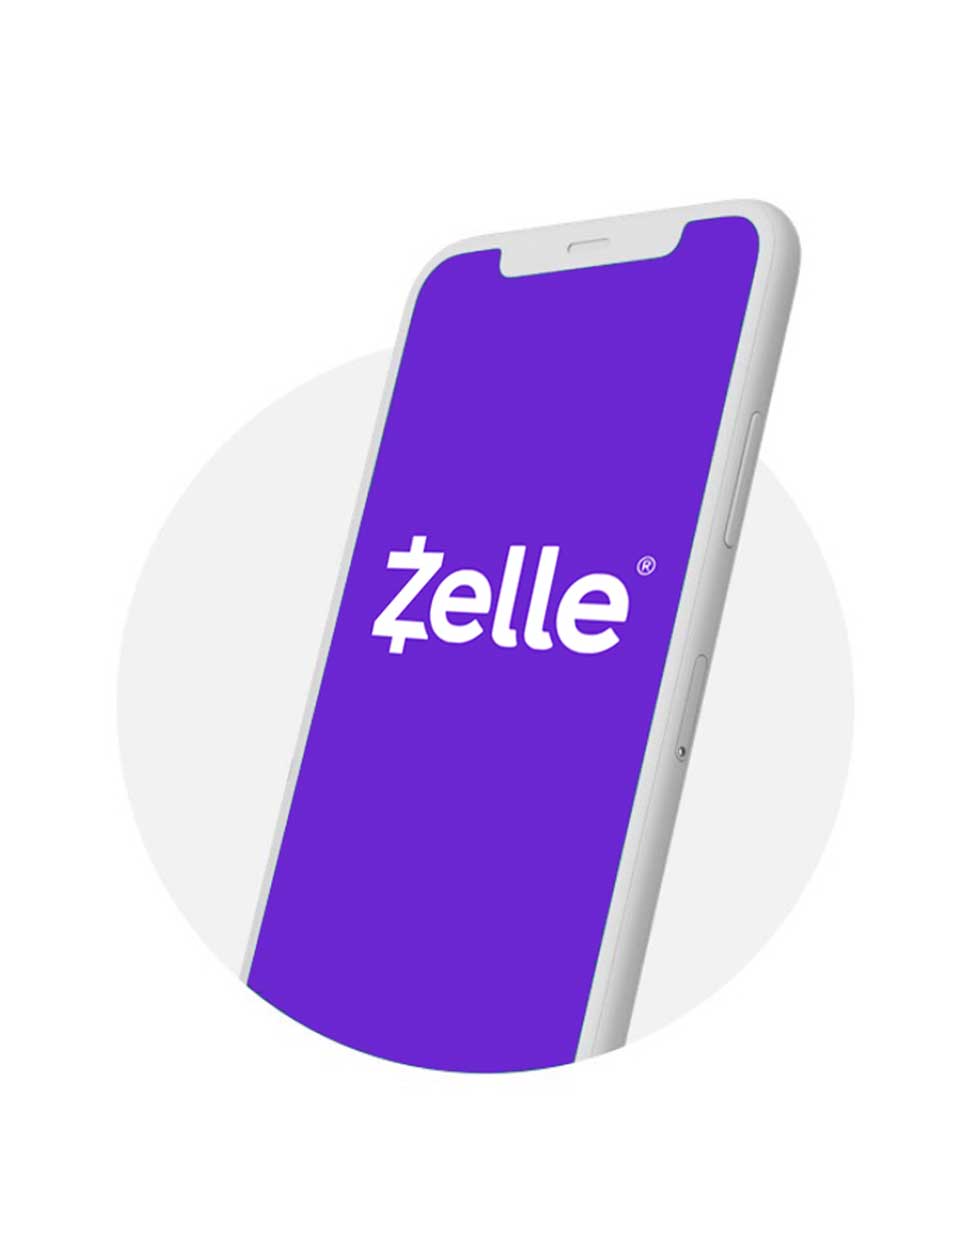 promo image for zelle app on smartphone